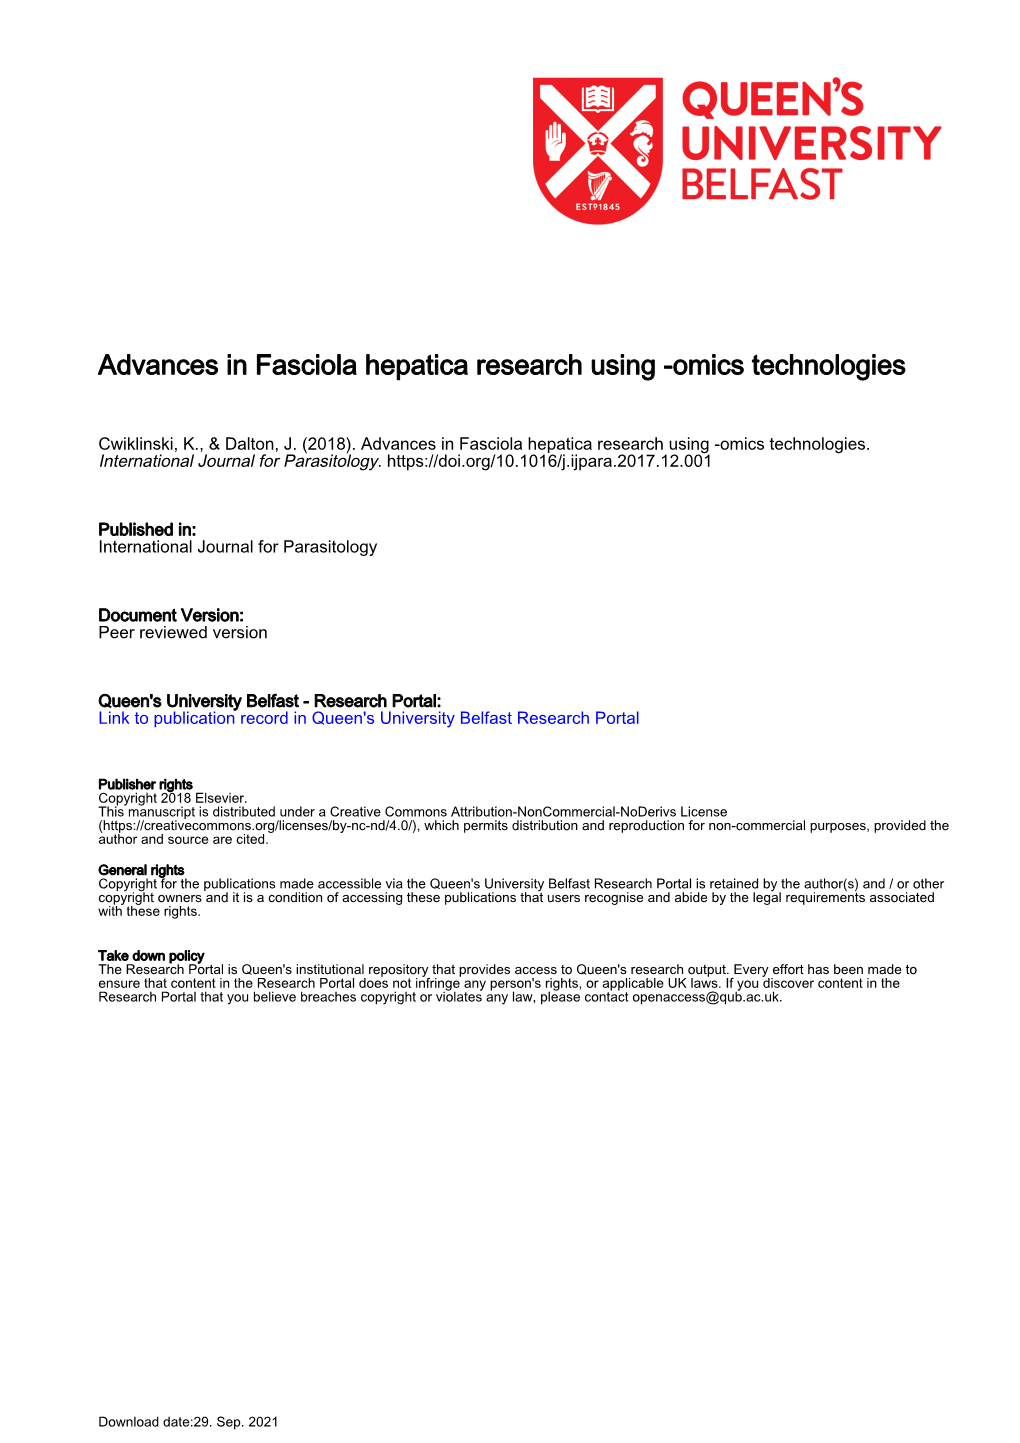 Advances in Fasciola Hepatica Research Using -Omics Technologies